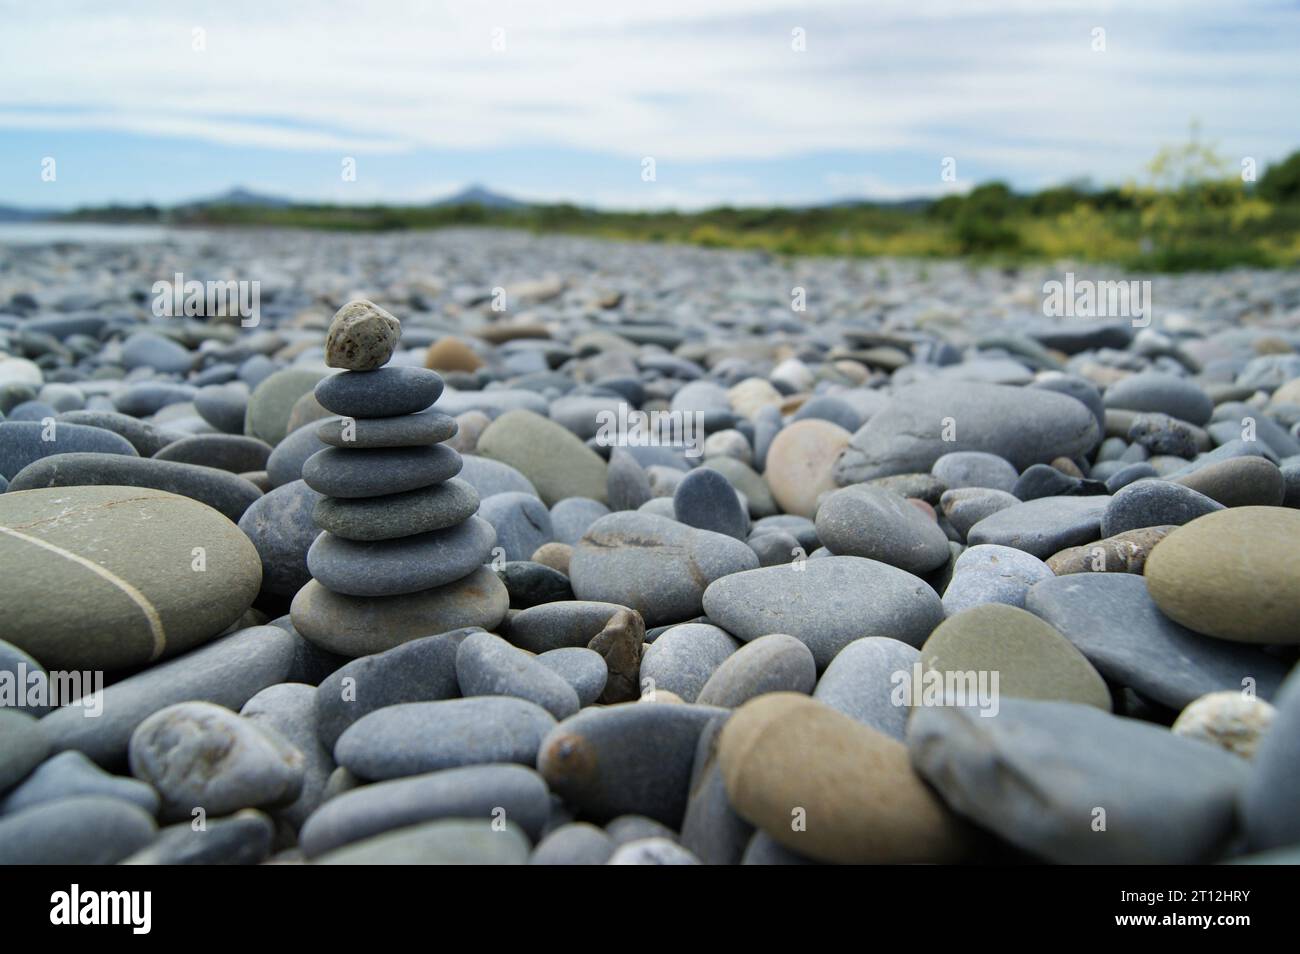 Zen tower on a rocky beach. Various pebbles on the beach. Stock Photo